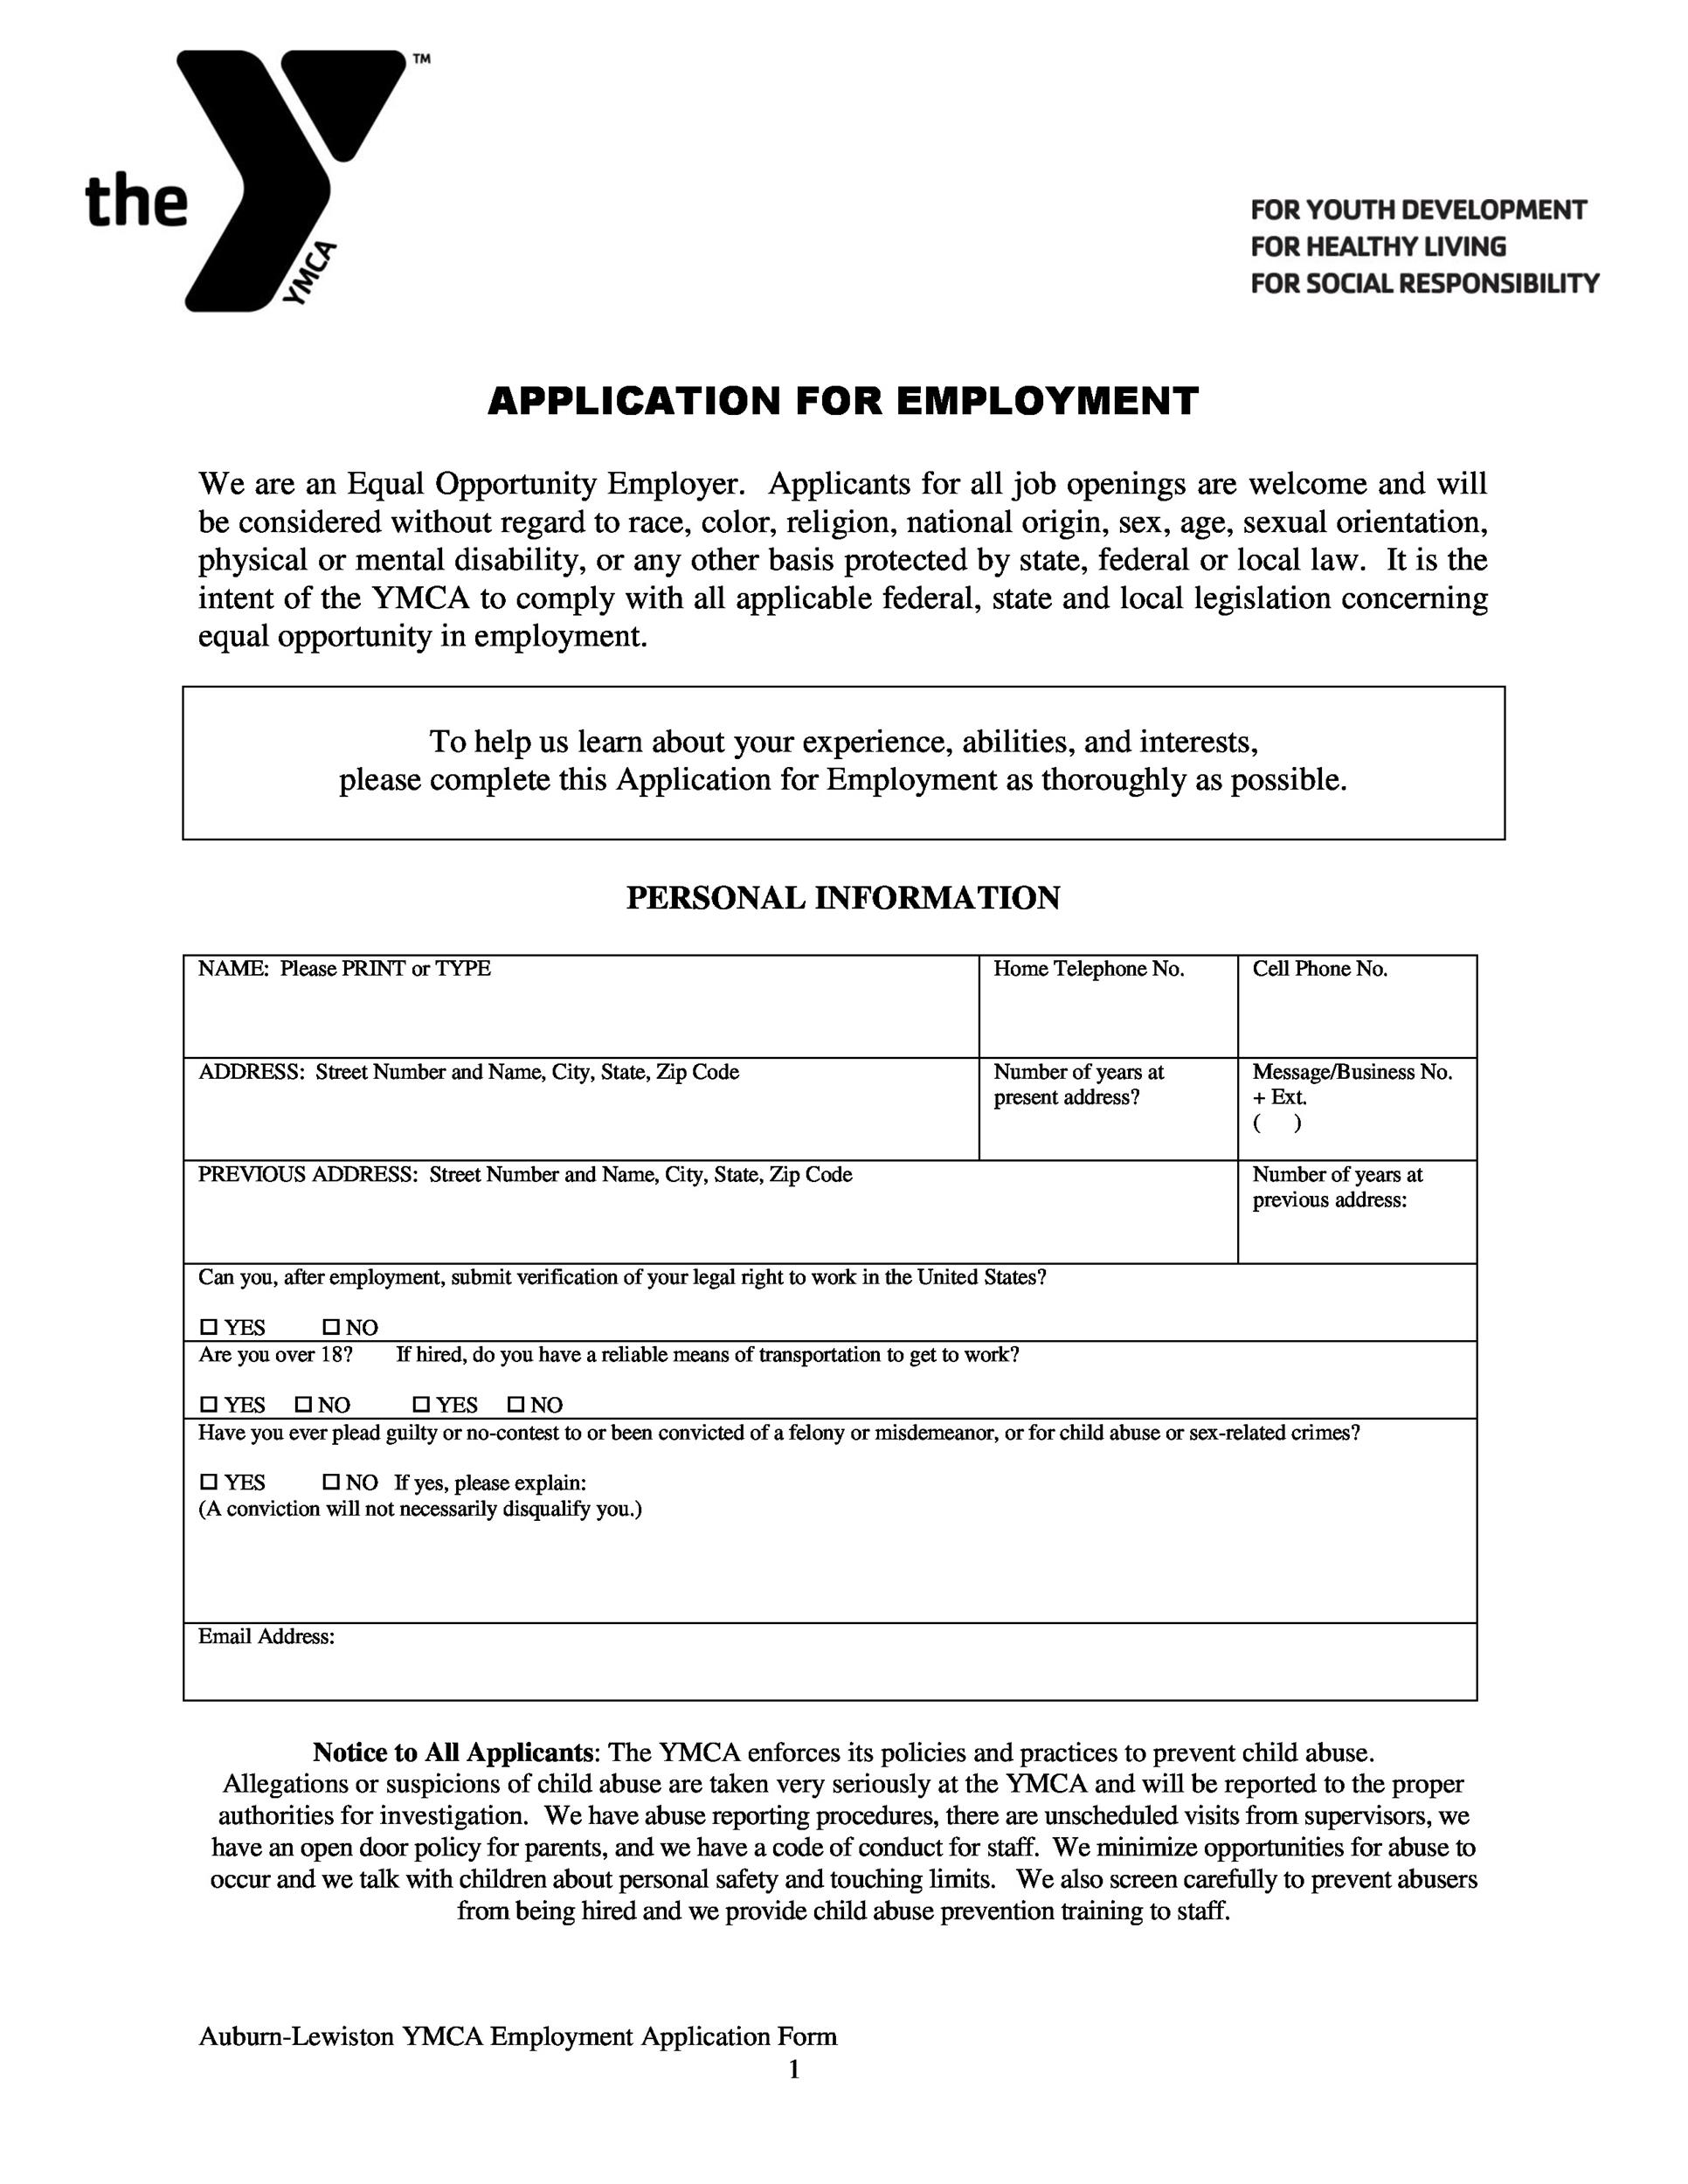 50 Free Employment / Job Application Form Templates Printable ᐅ